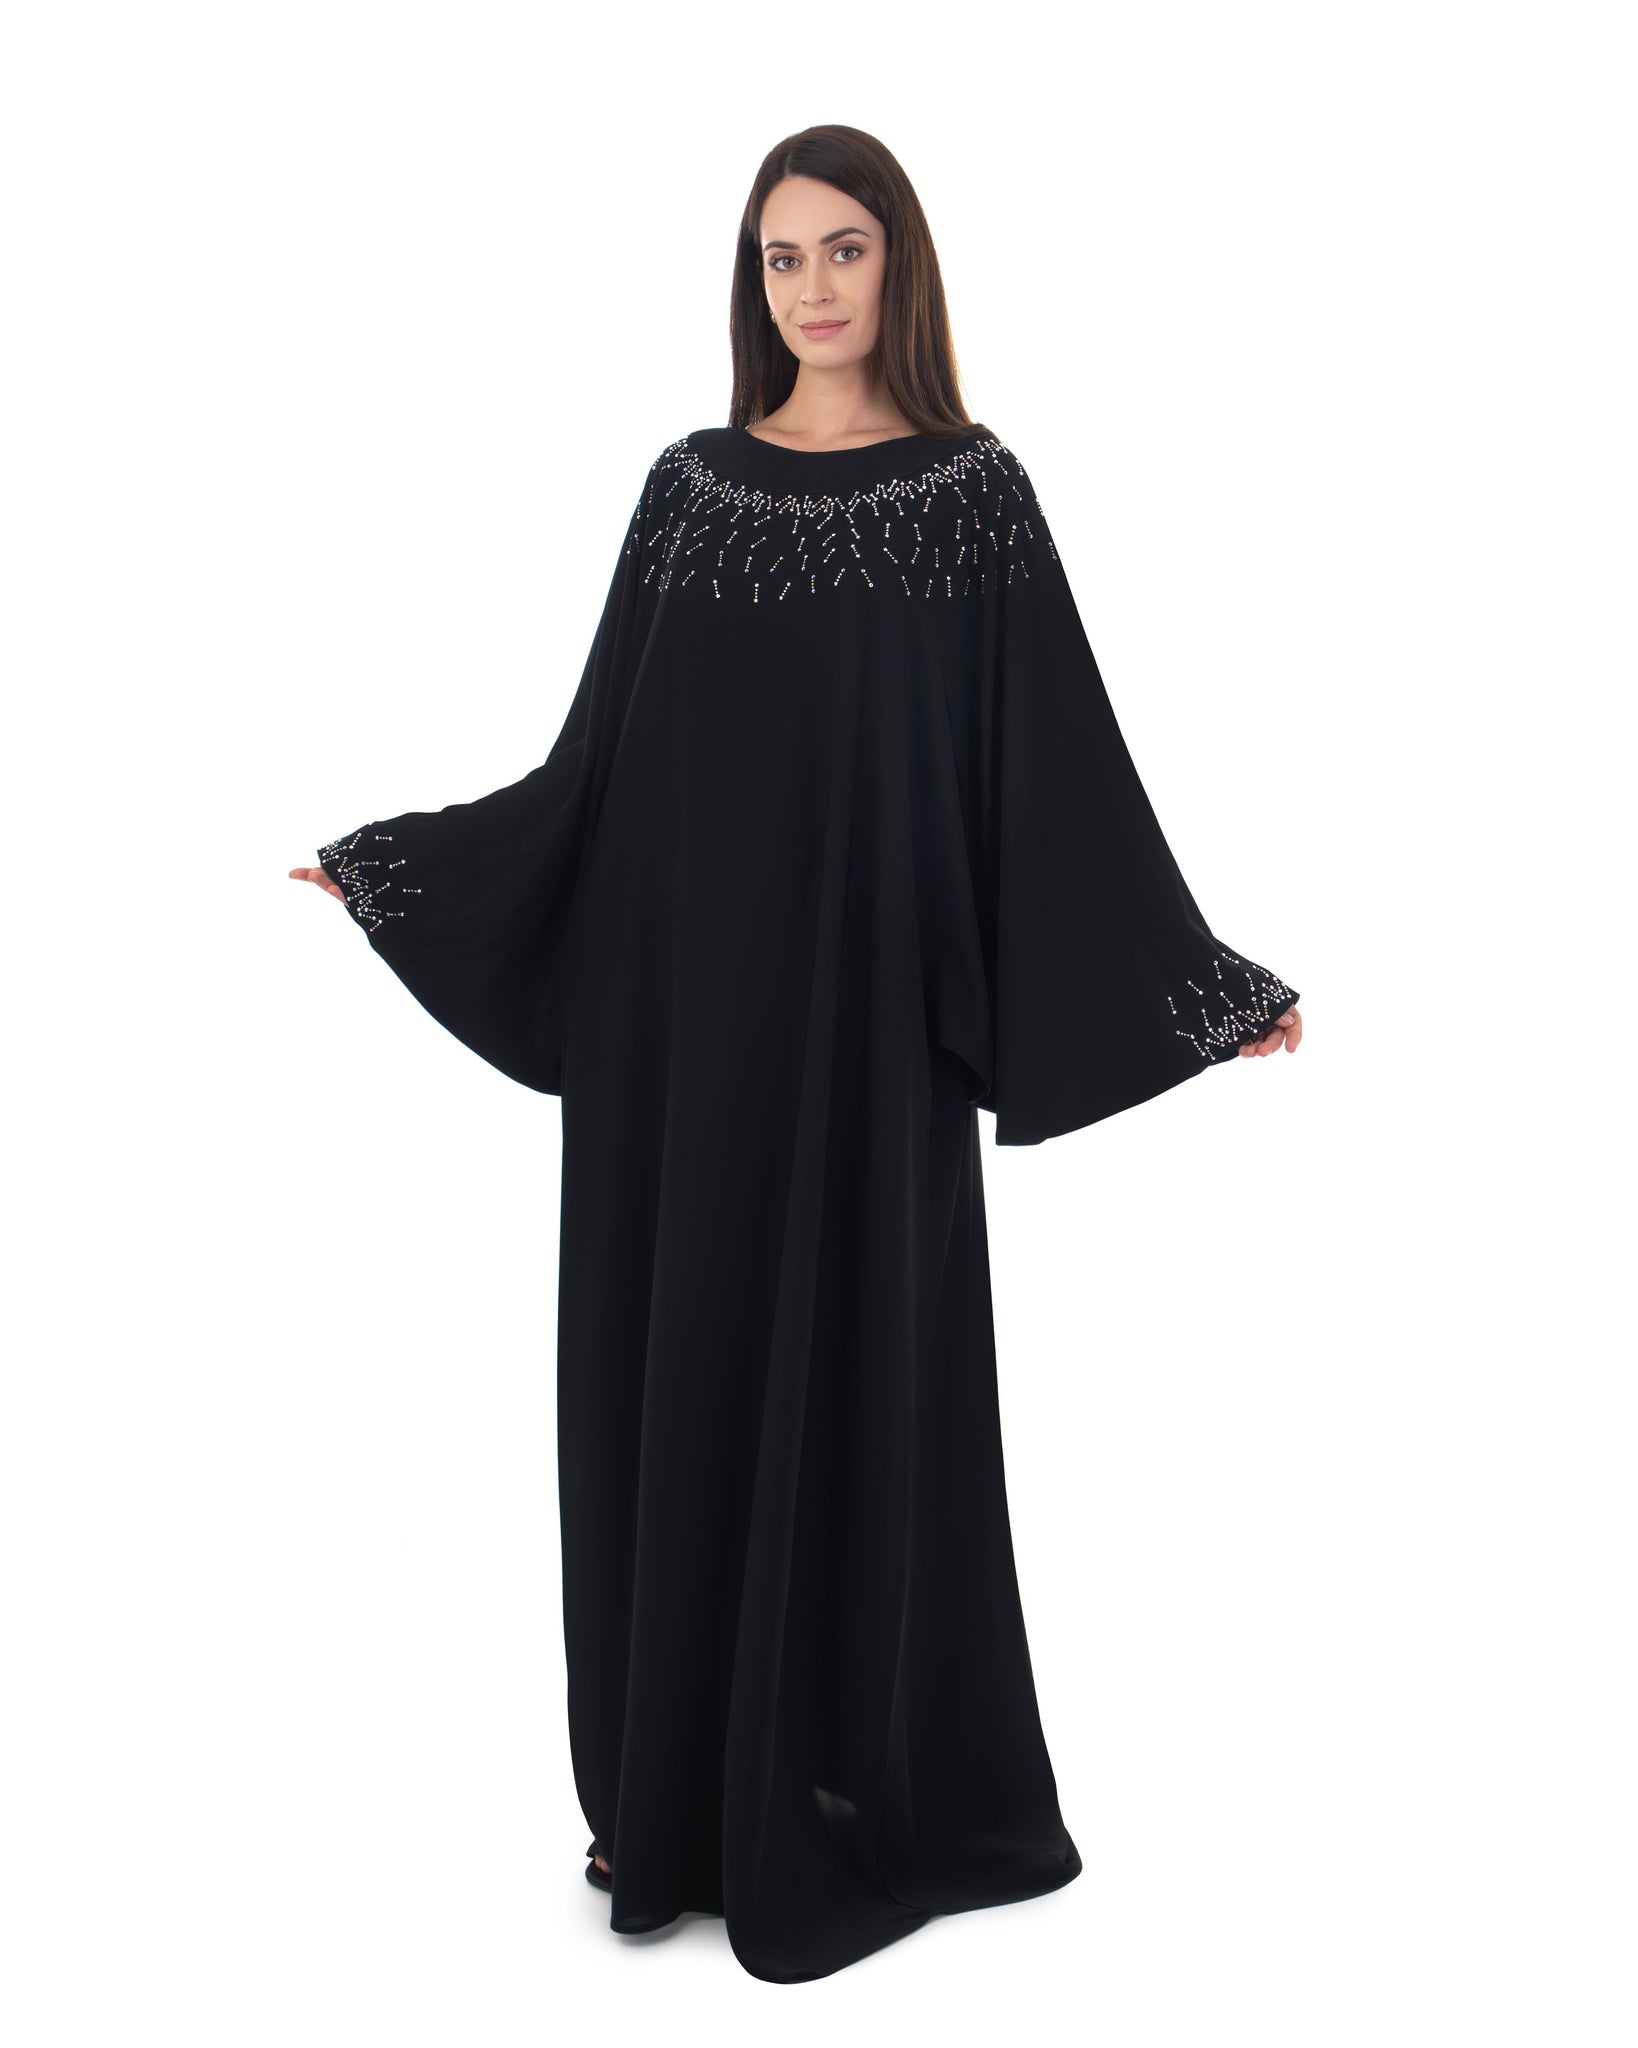 Hanayen Trendy Abaya Design With Crystals Embellishment